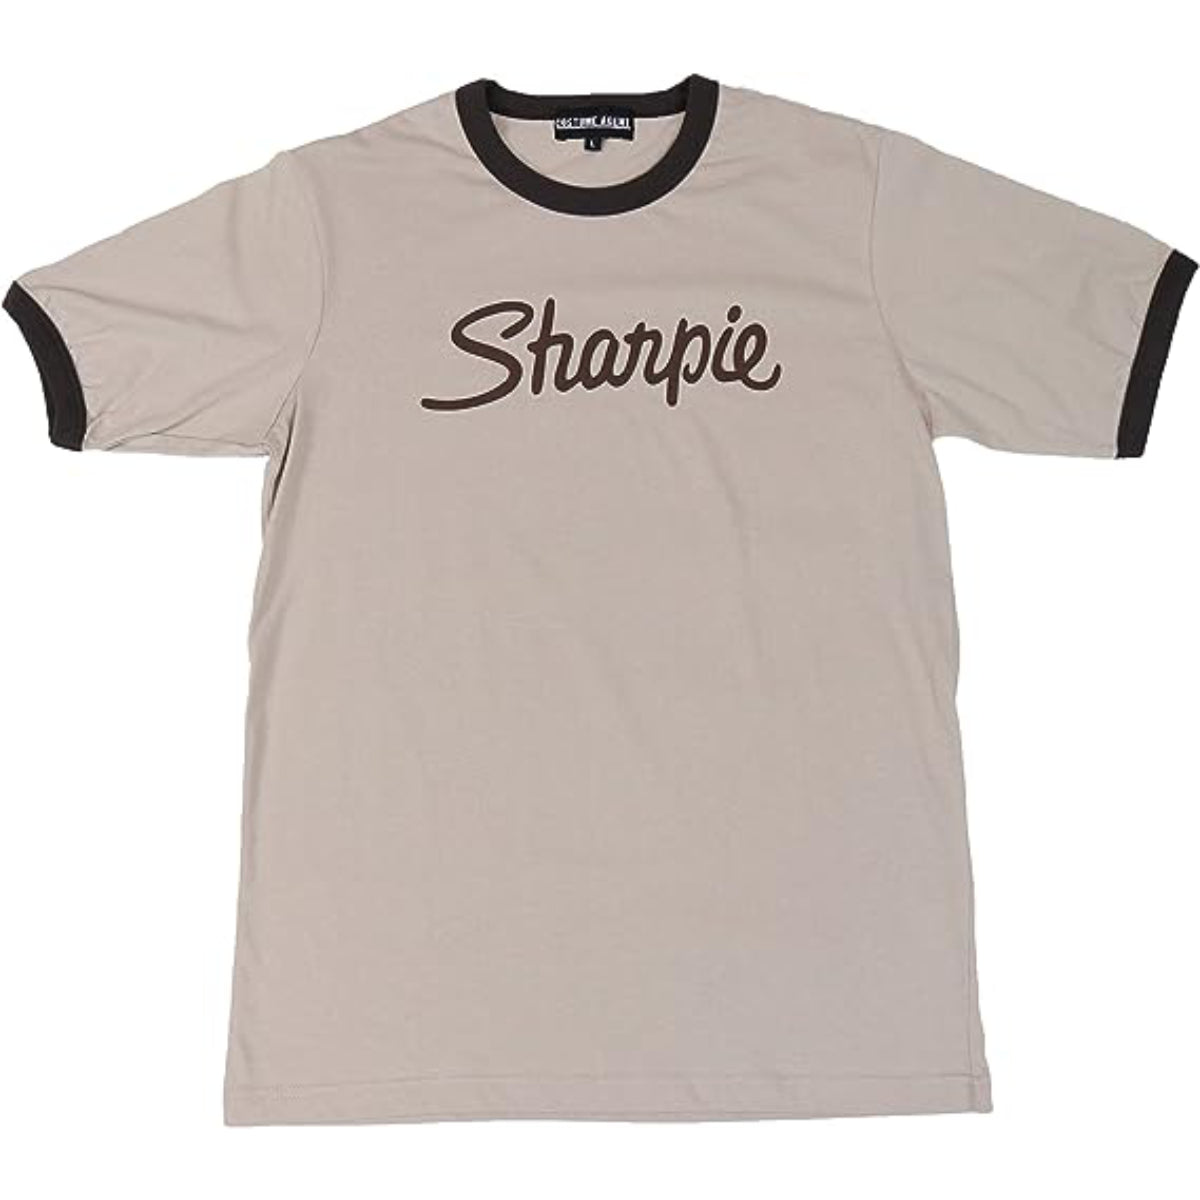 Scott Pilgrim Sharpie Ringer Shirt Heather Brown Pilgrim Rock Band Adult T-Shirt Only